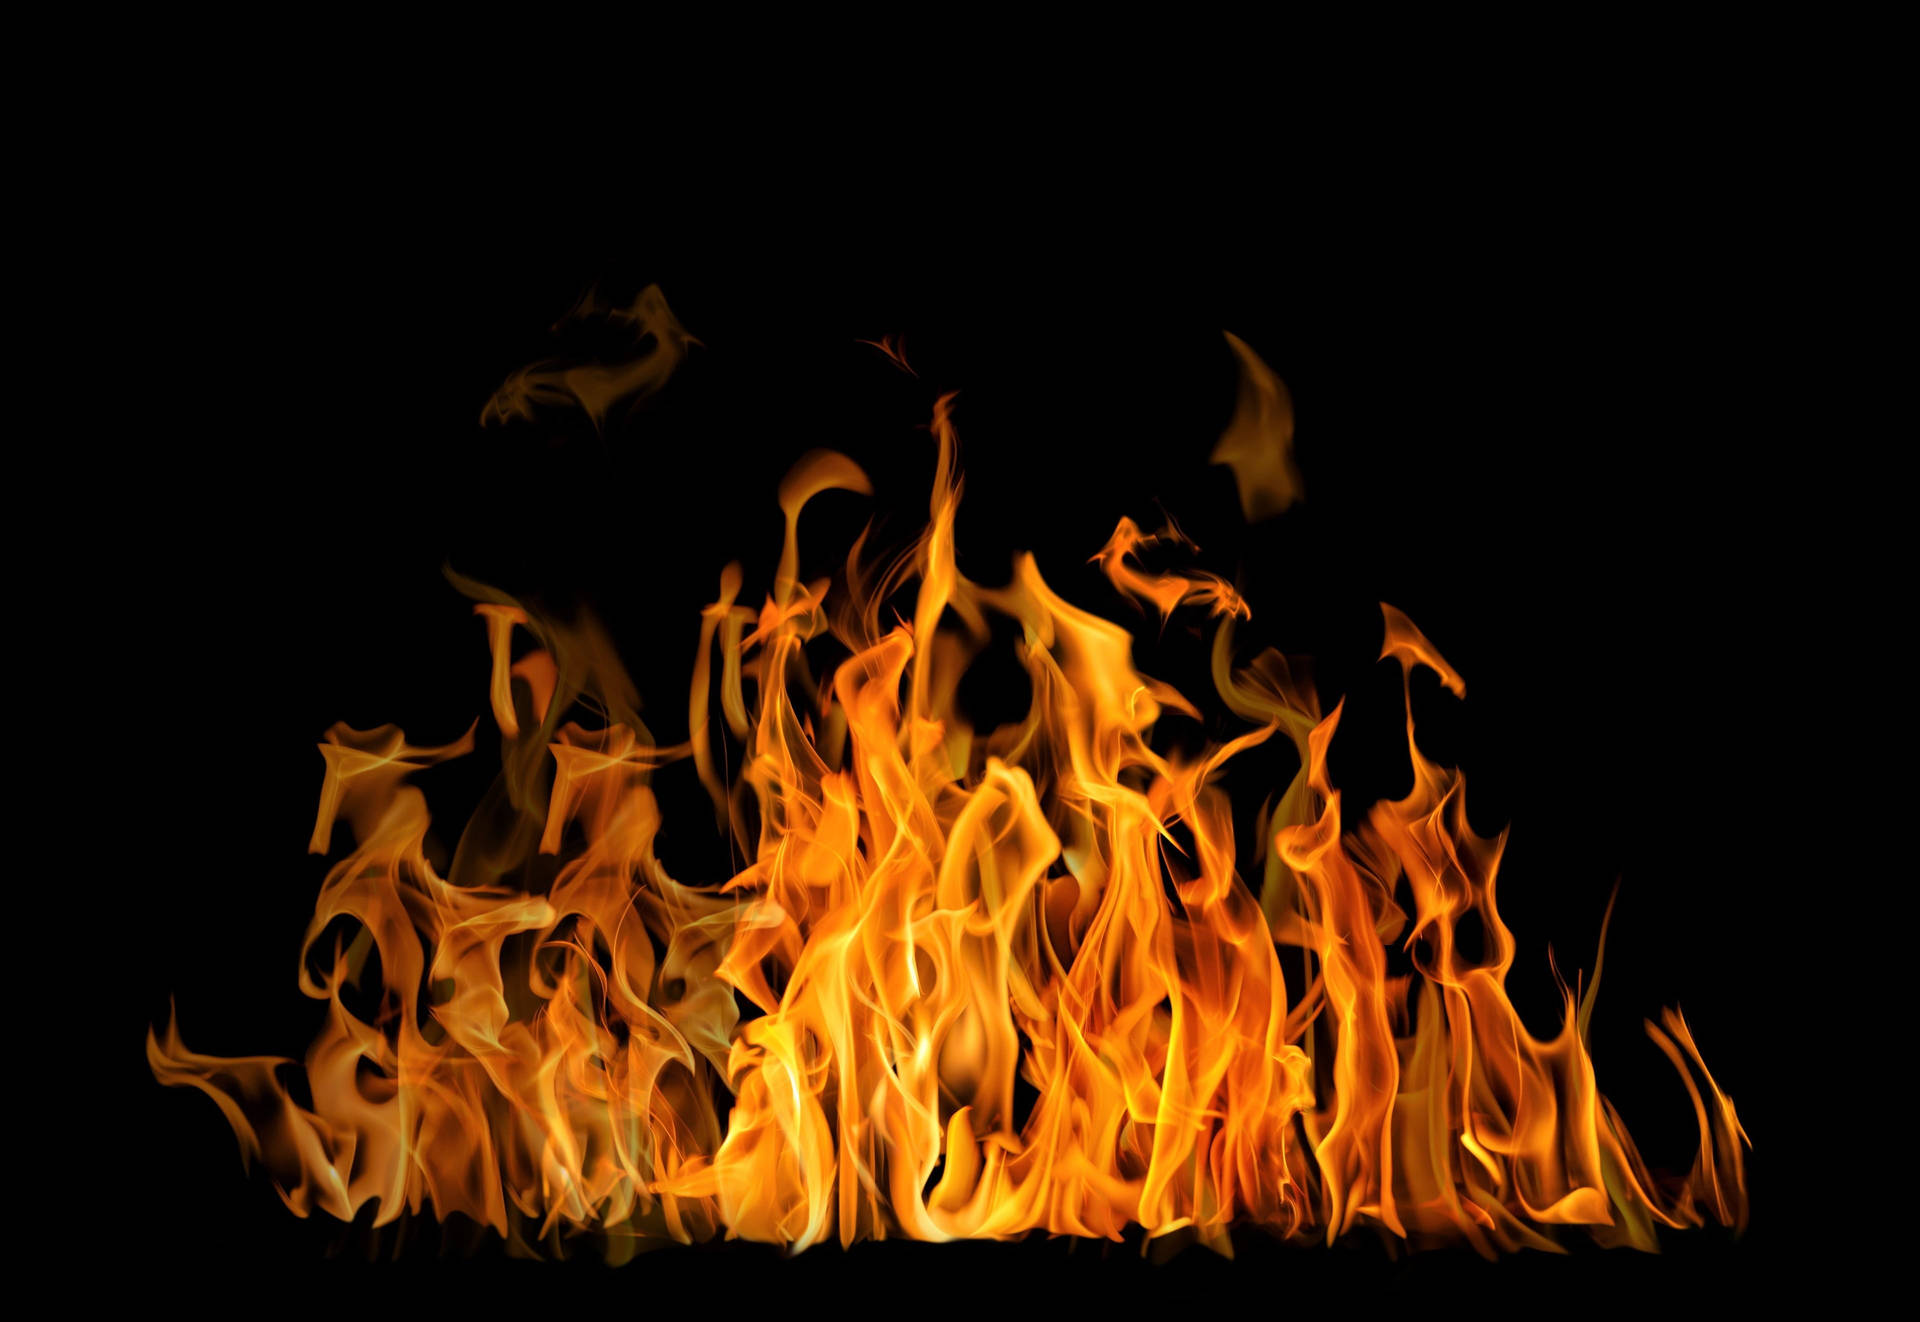 Captivating Fiery Blaze 4k Image Wallpaper